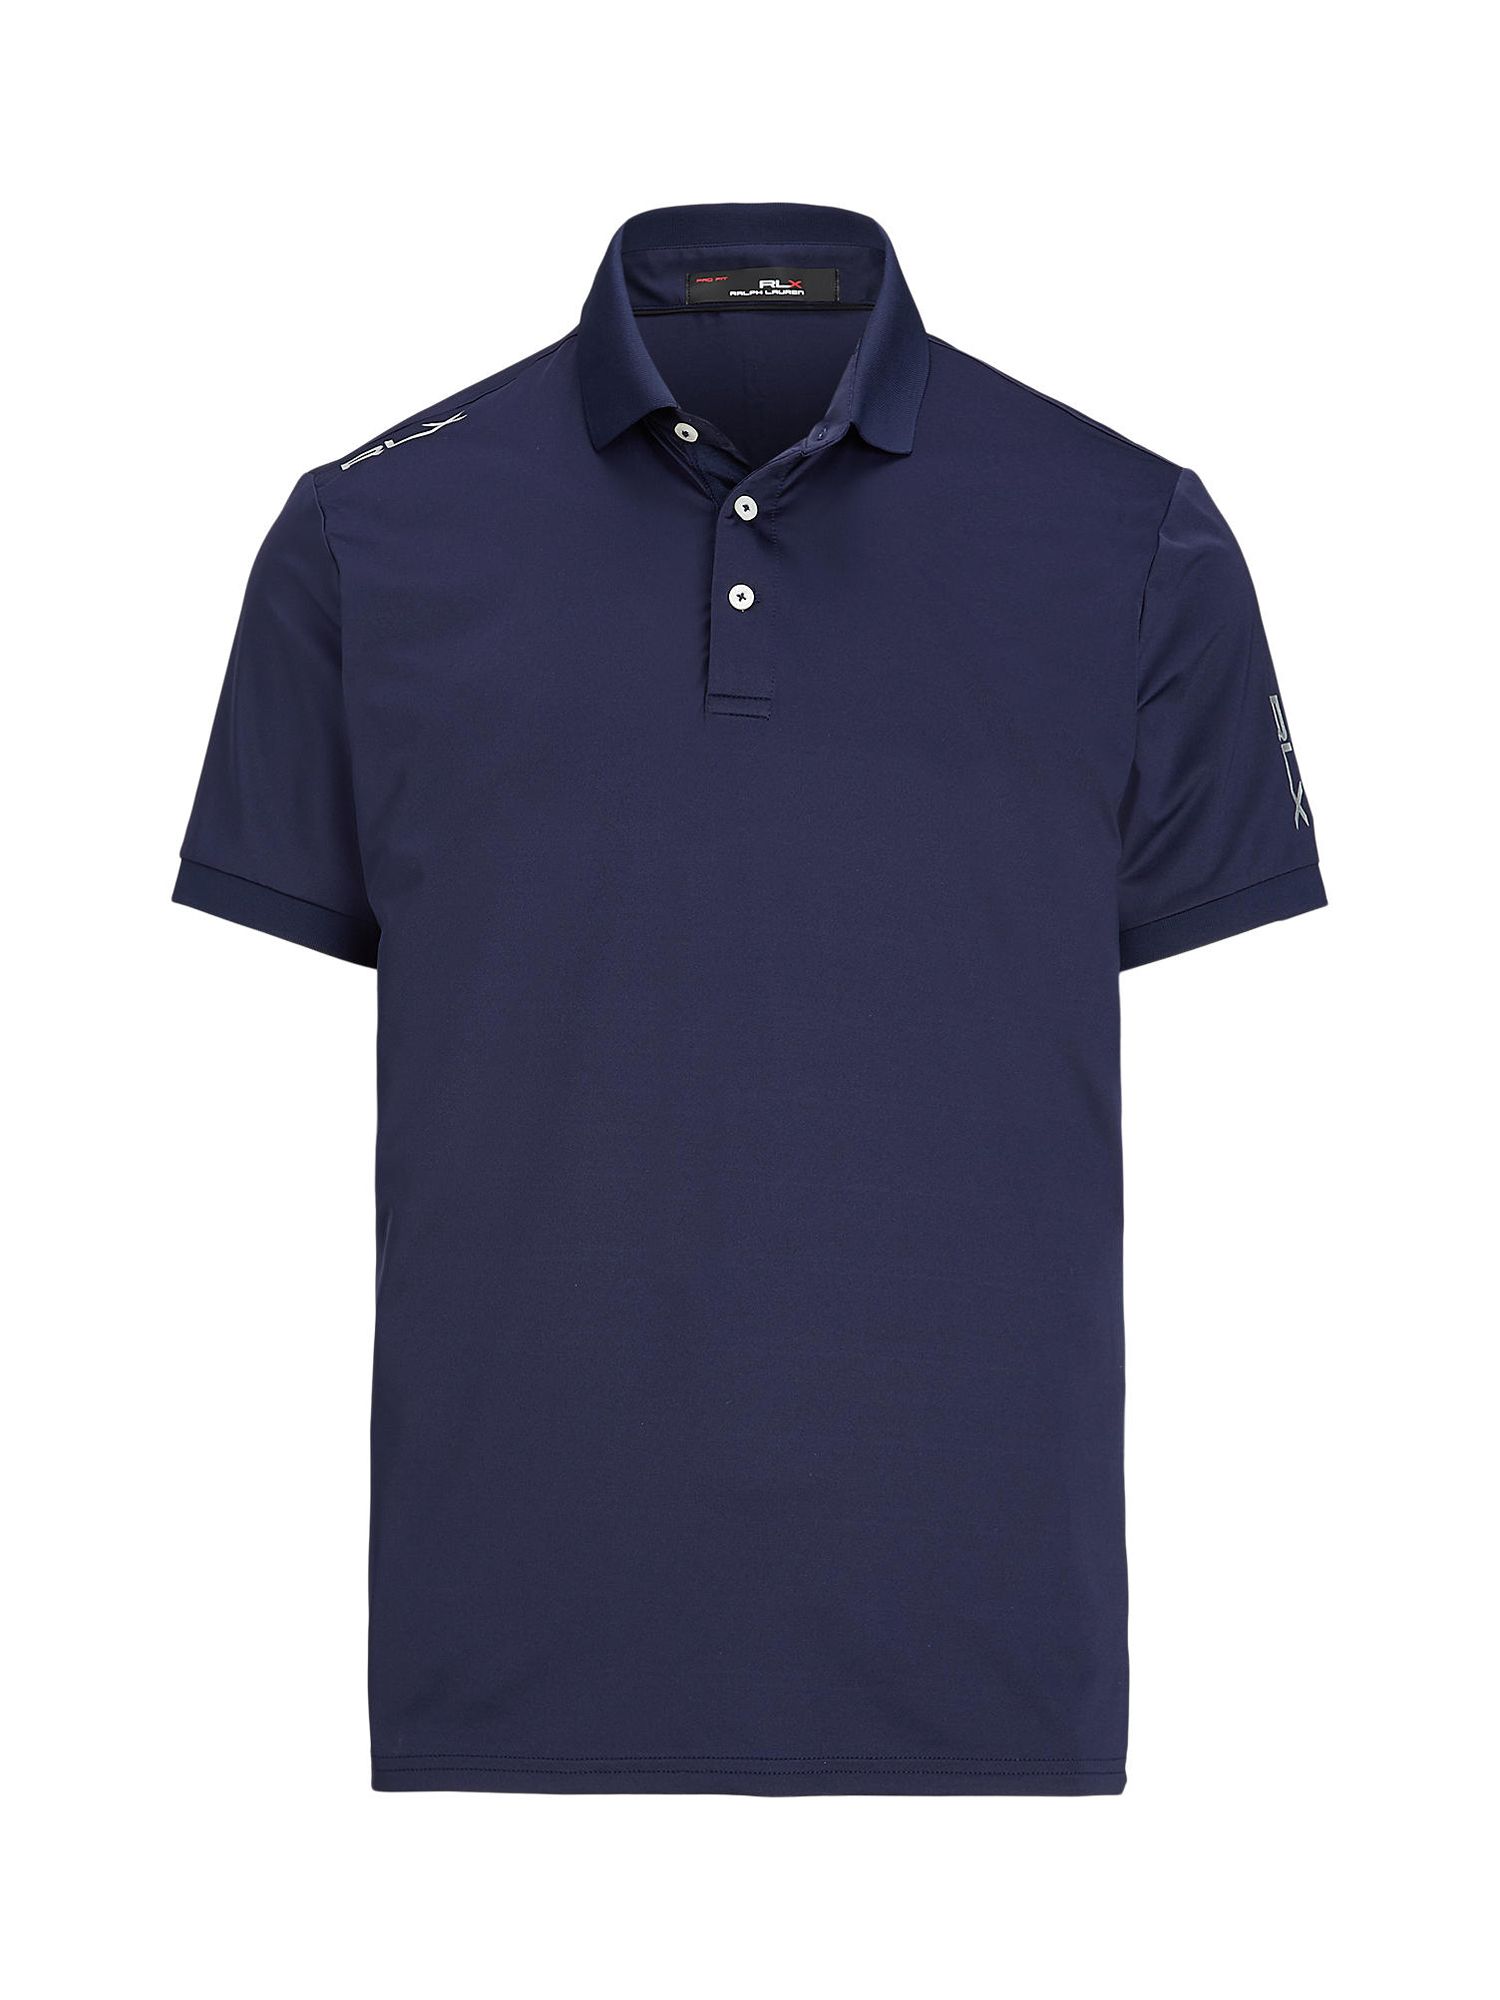 Polo Golf by Ralph Lauren RLX Polo Shirt, Navy at John Lewis & Partners